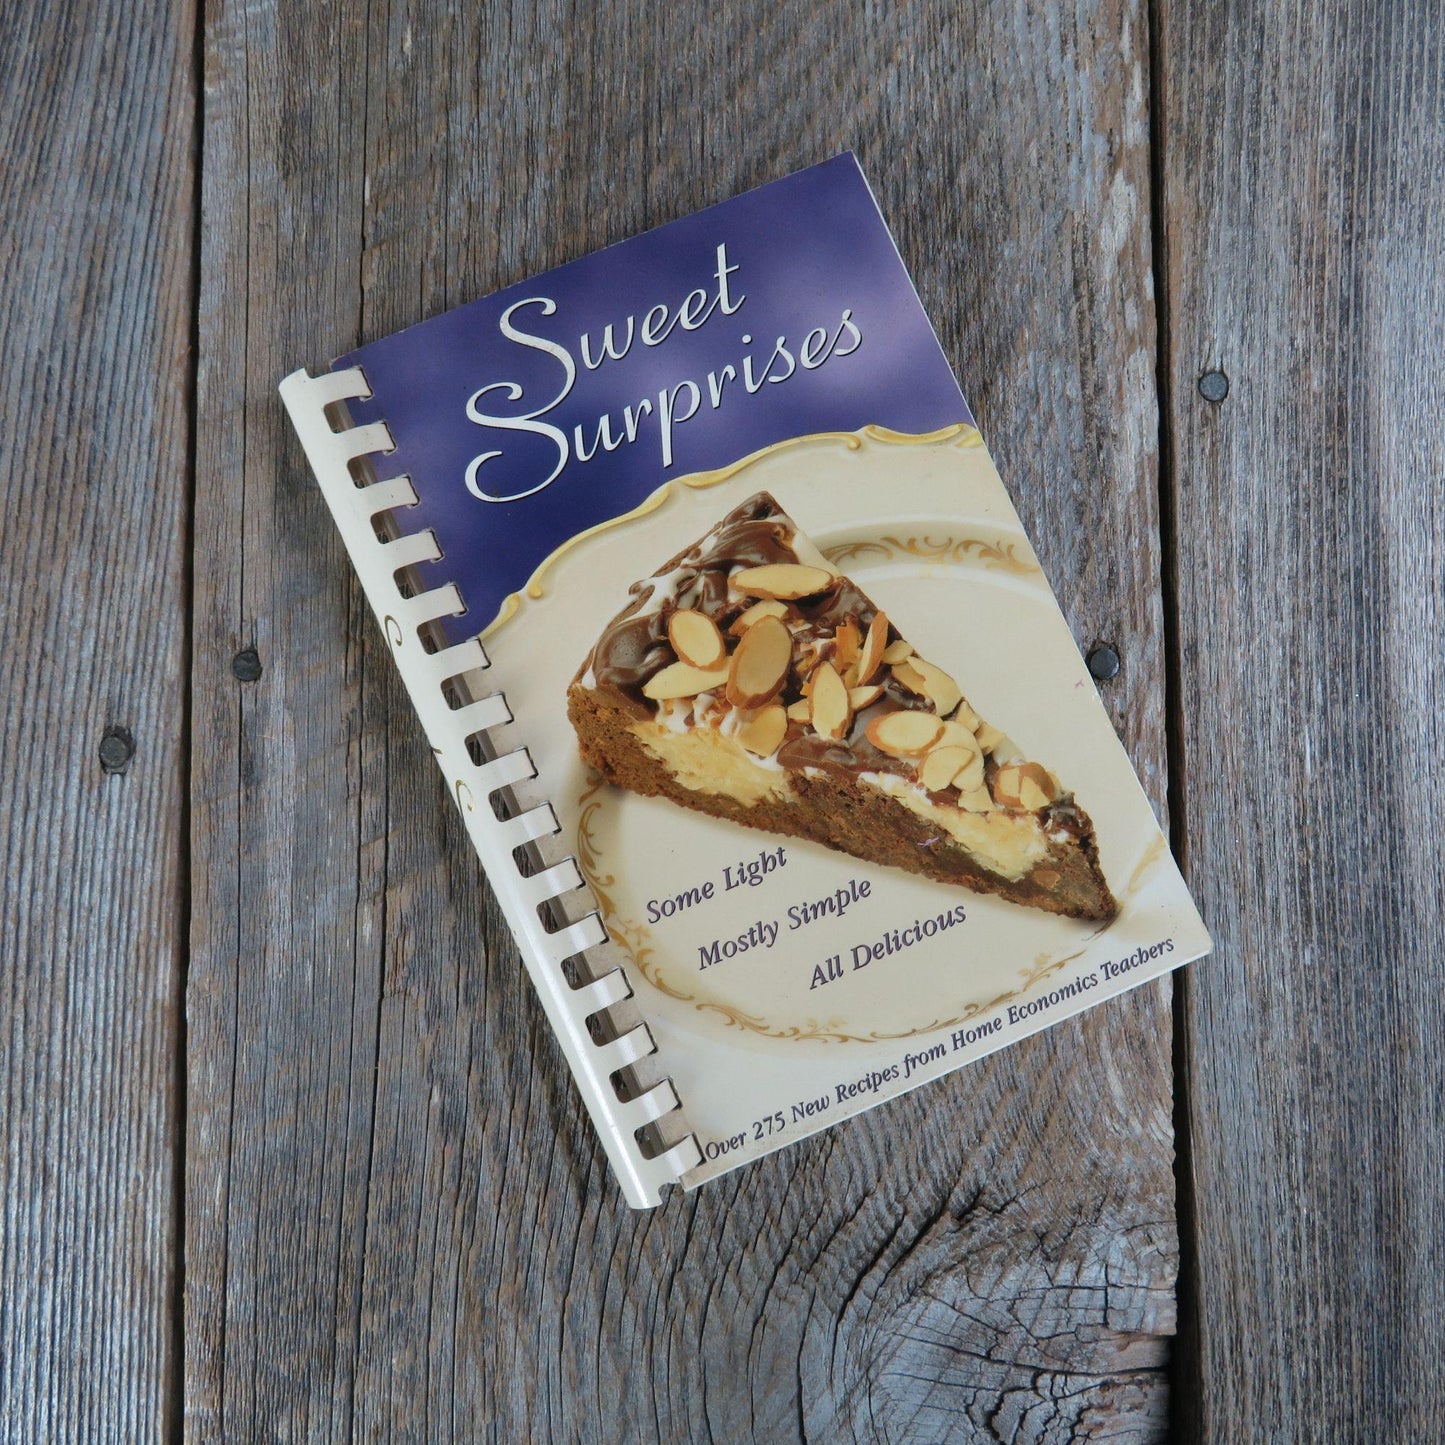 Vintage Sweet Surprises Cookbook Dessert Home Economics Recipes Cake Pies Cookies 1998